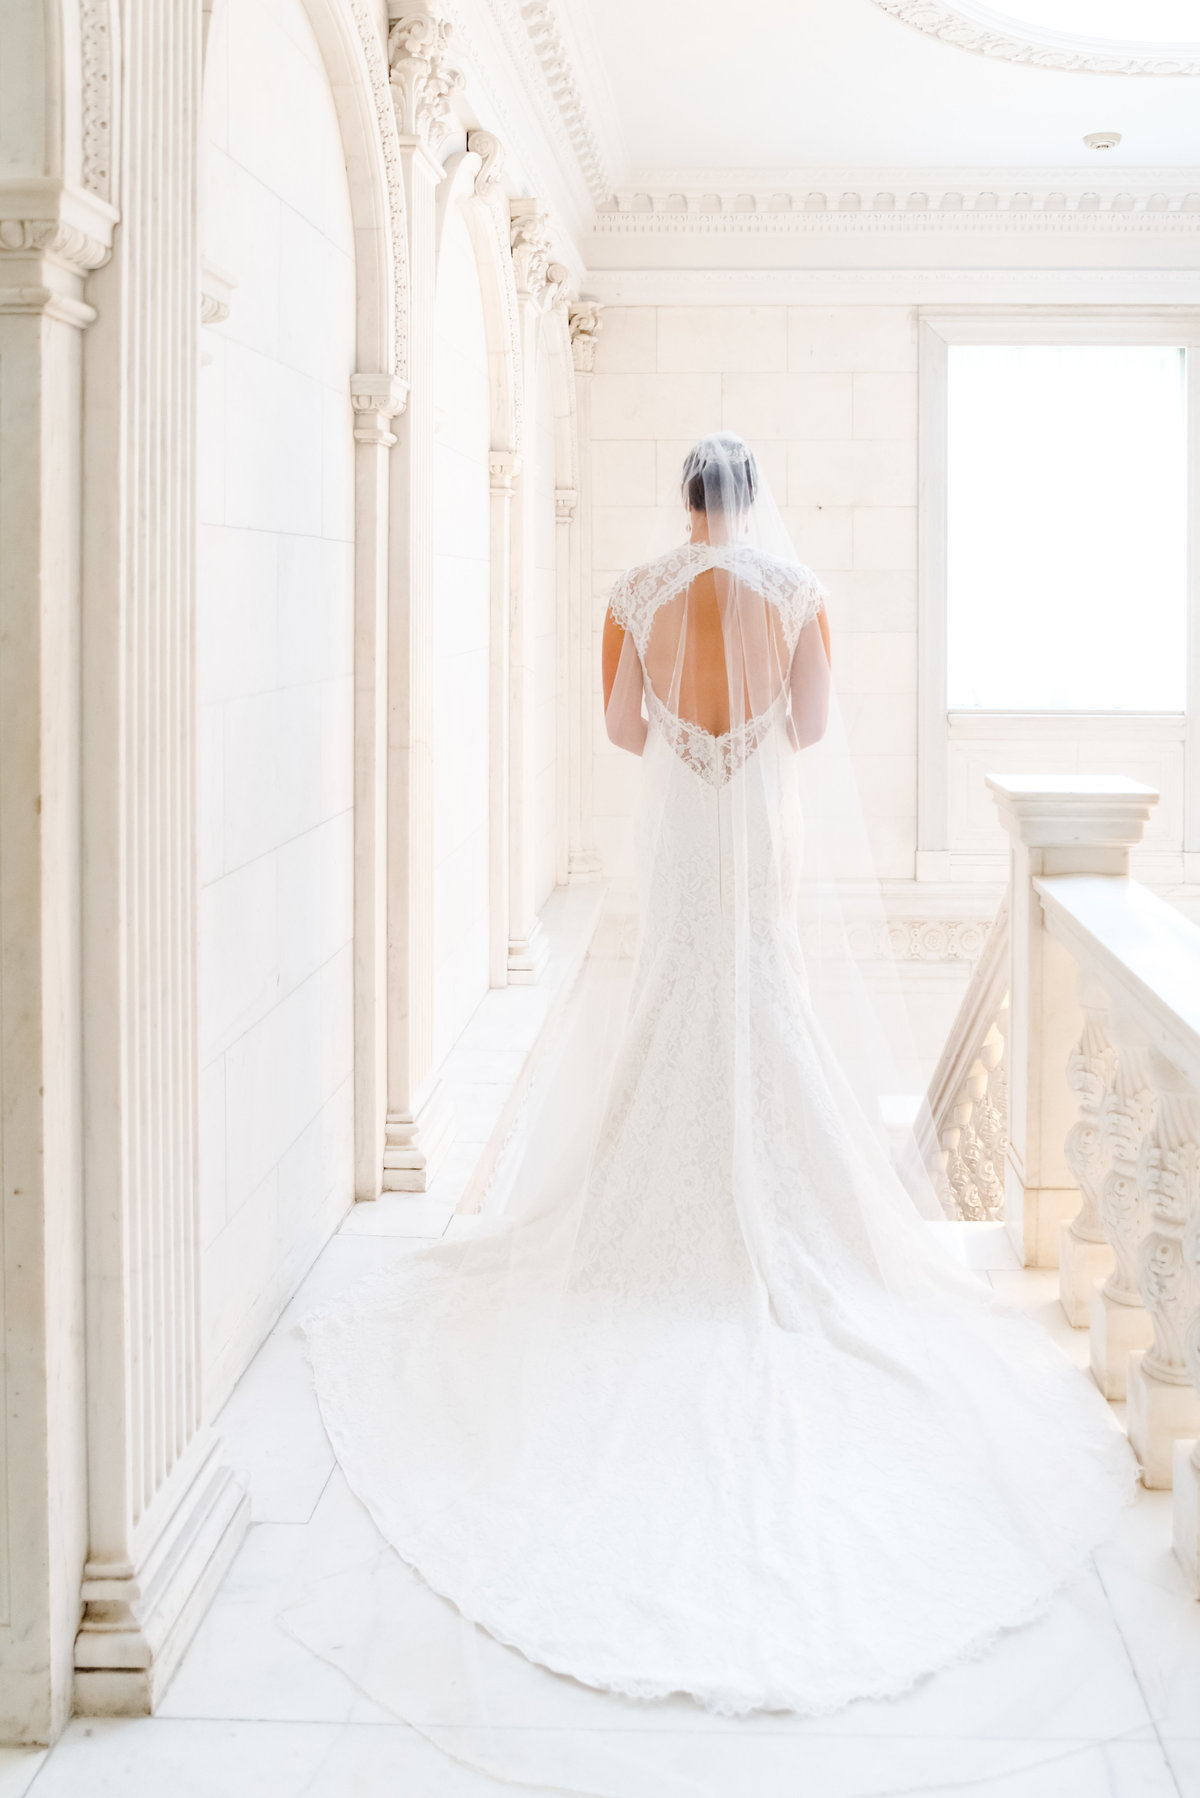 NYIT De Seversky Mansion Wedding--New York Wedding Photographer Olivia and Ben Wedding 151919-5